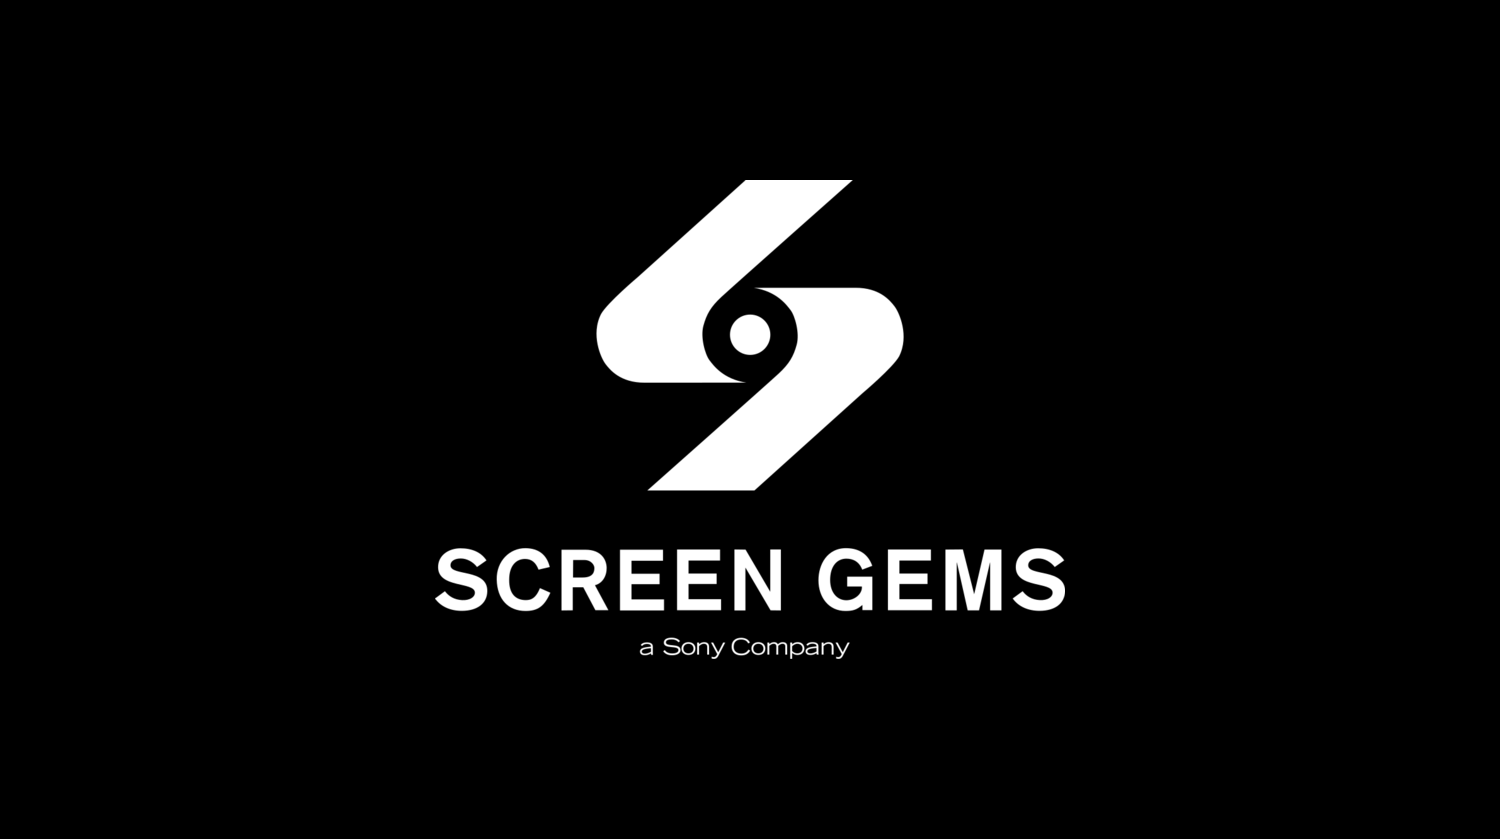 Screen Gems. Screen Gems a Sony Company. Screen Gems logo. Screen Gems Sony pictures.